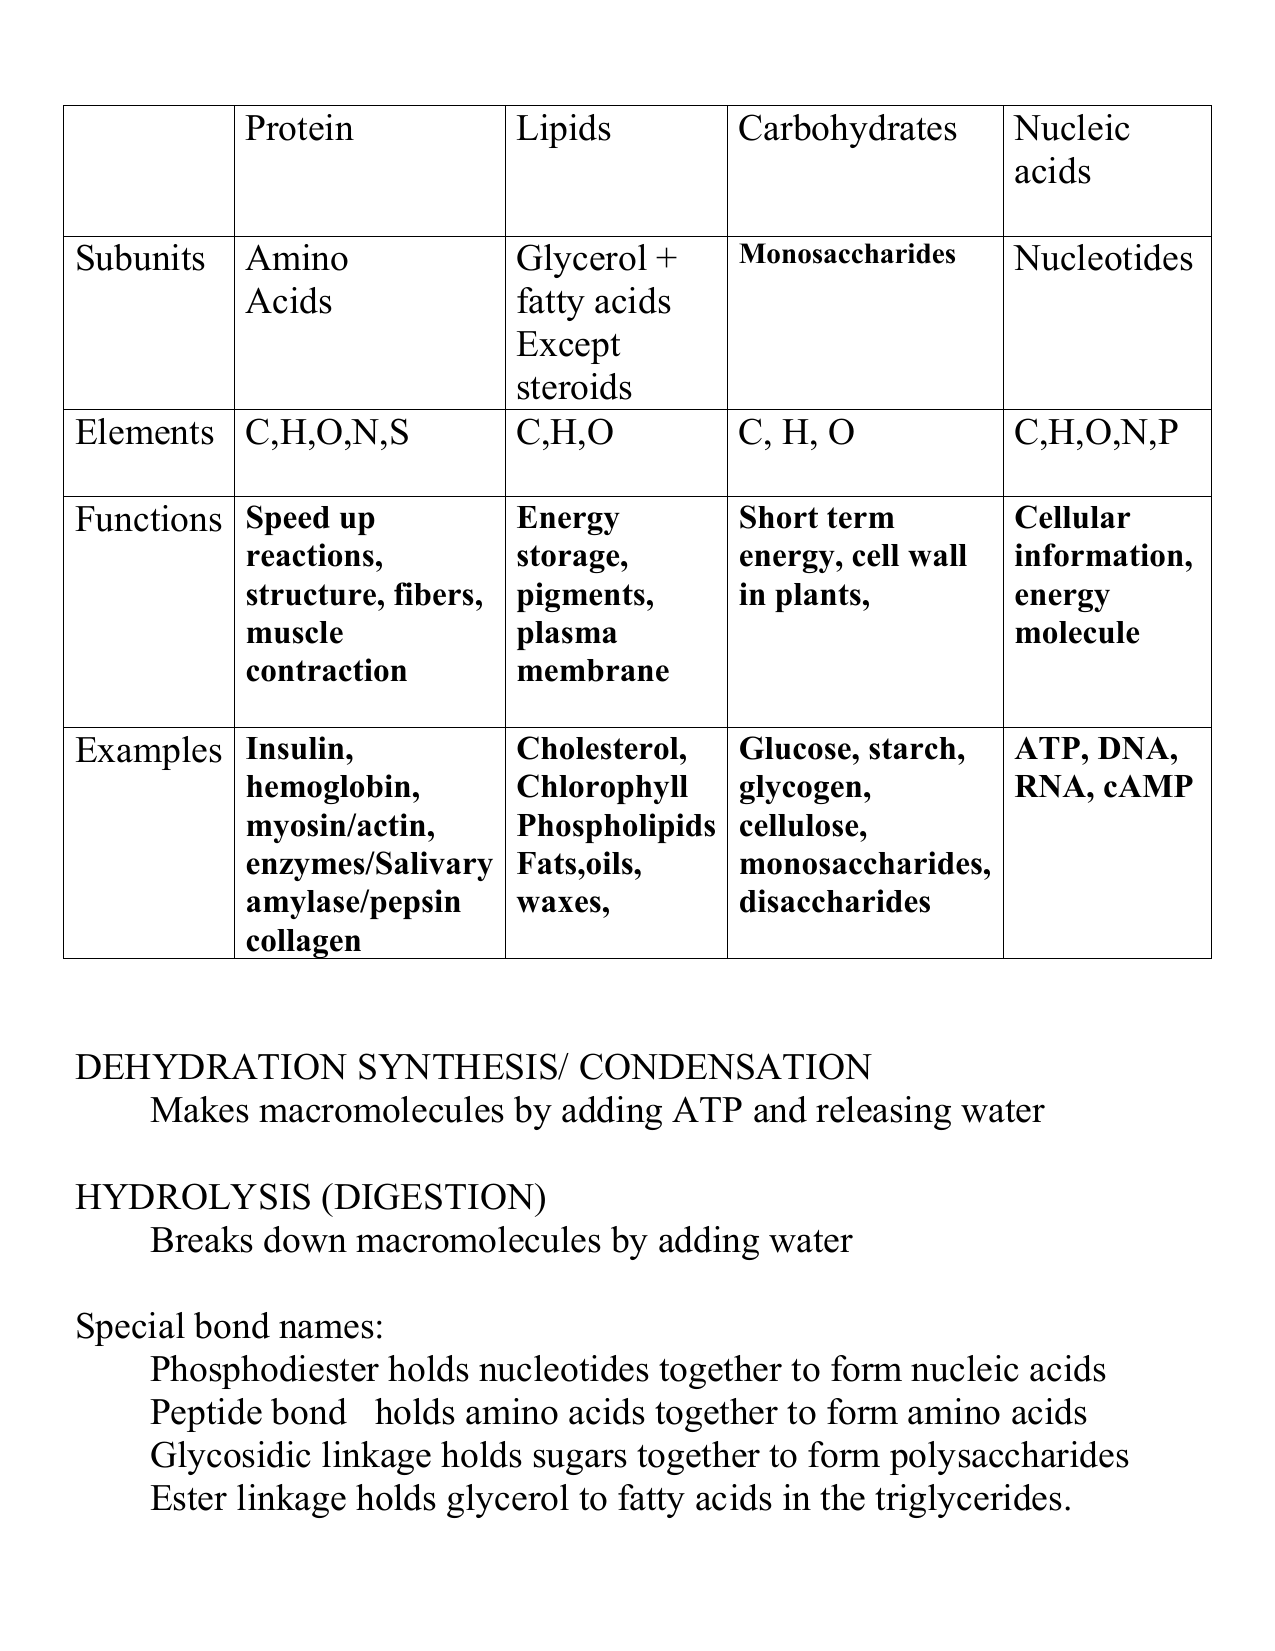 Amino Acid Functions Chart